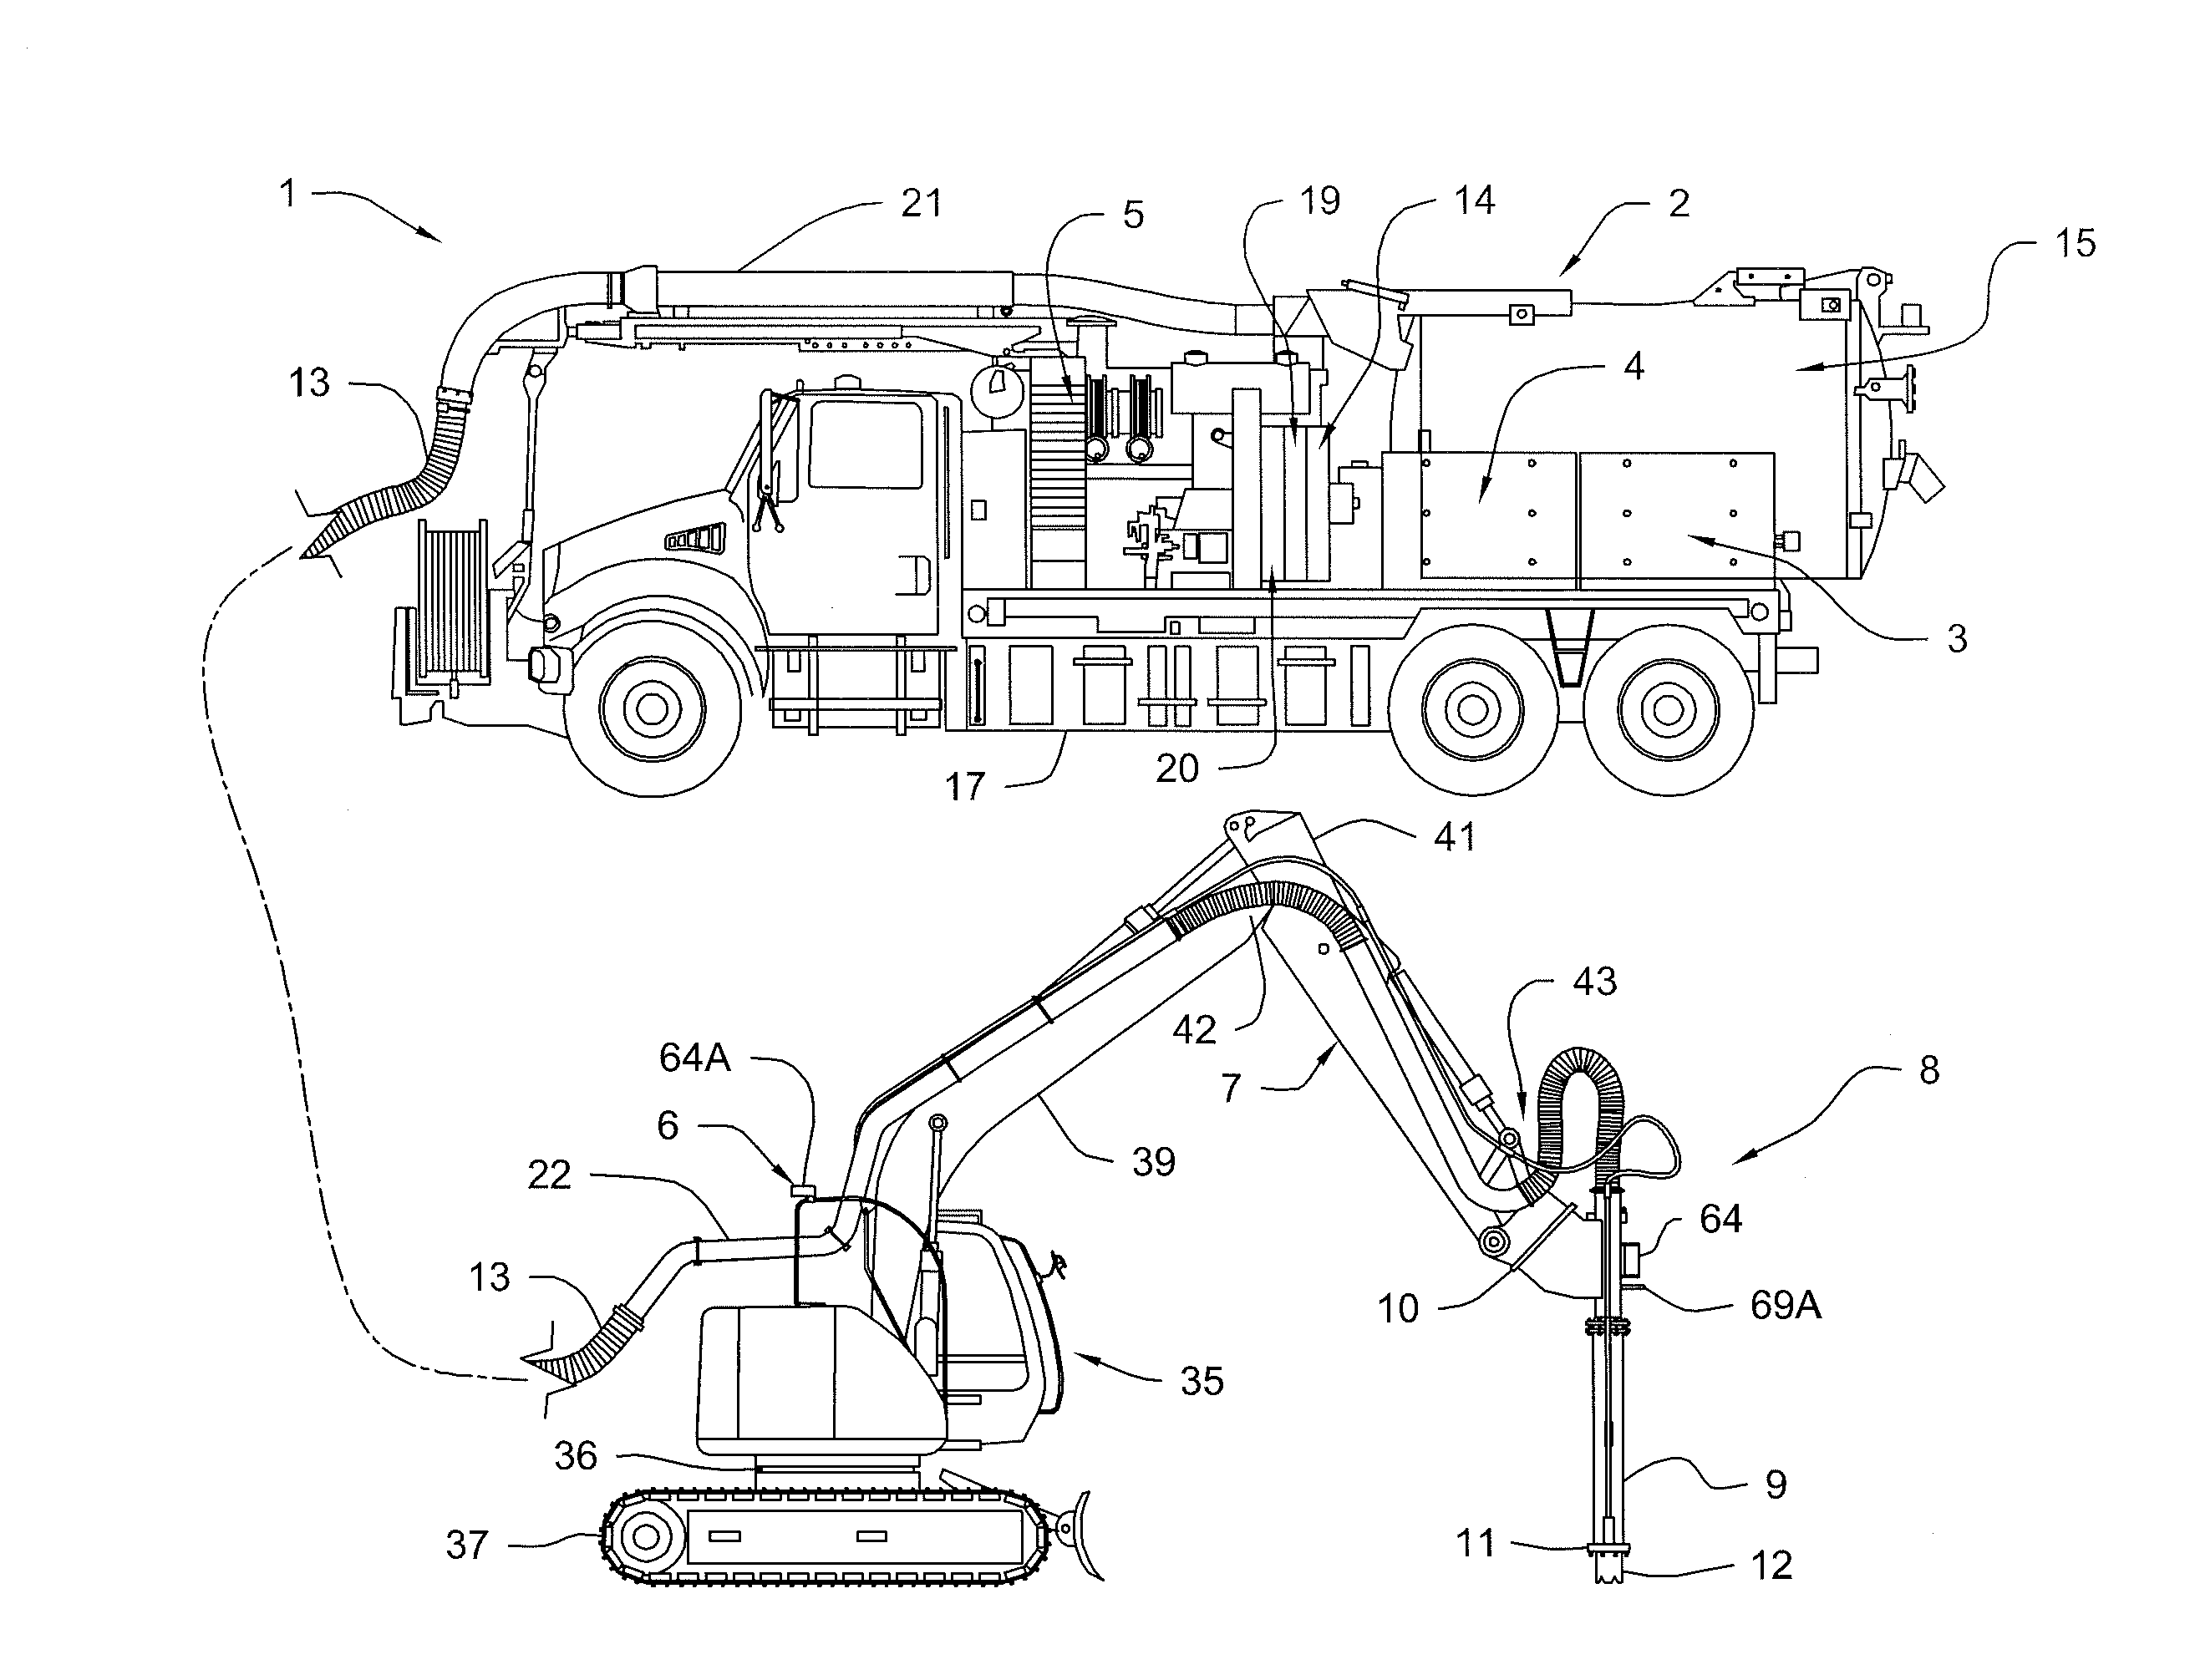 Excavation system